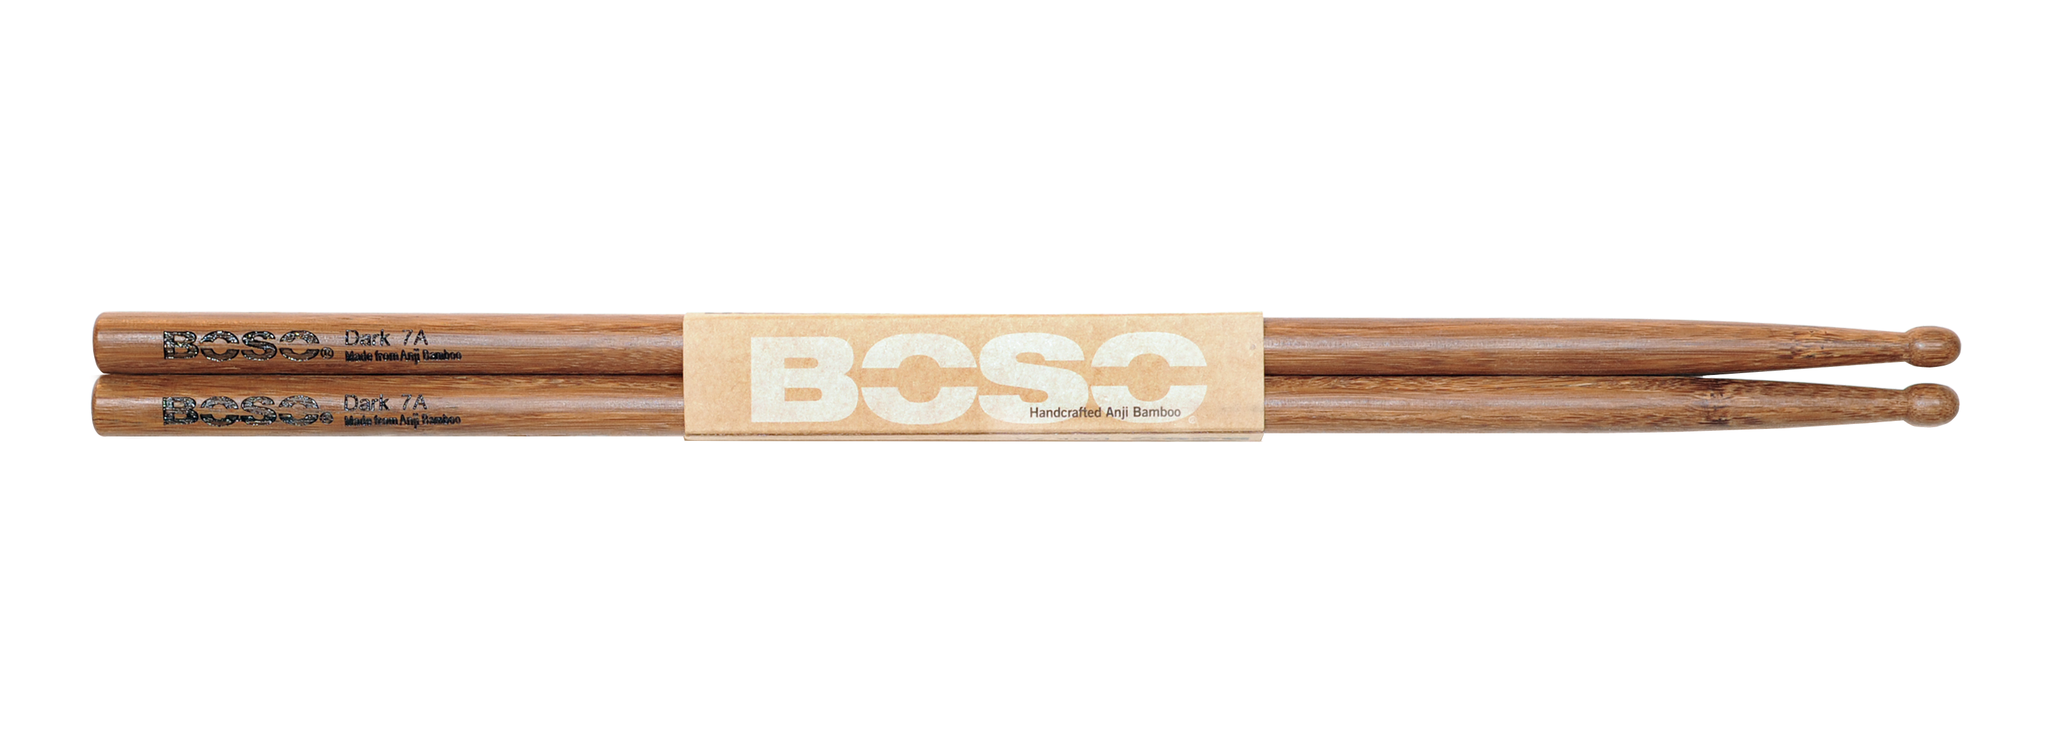 Boso Bamboo Drumsticks - Dark 7A